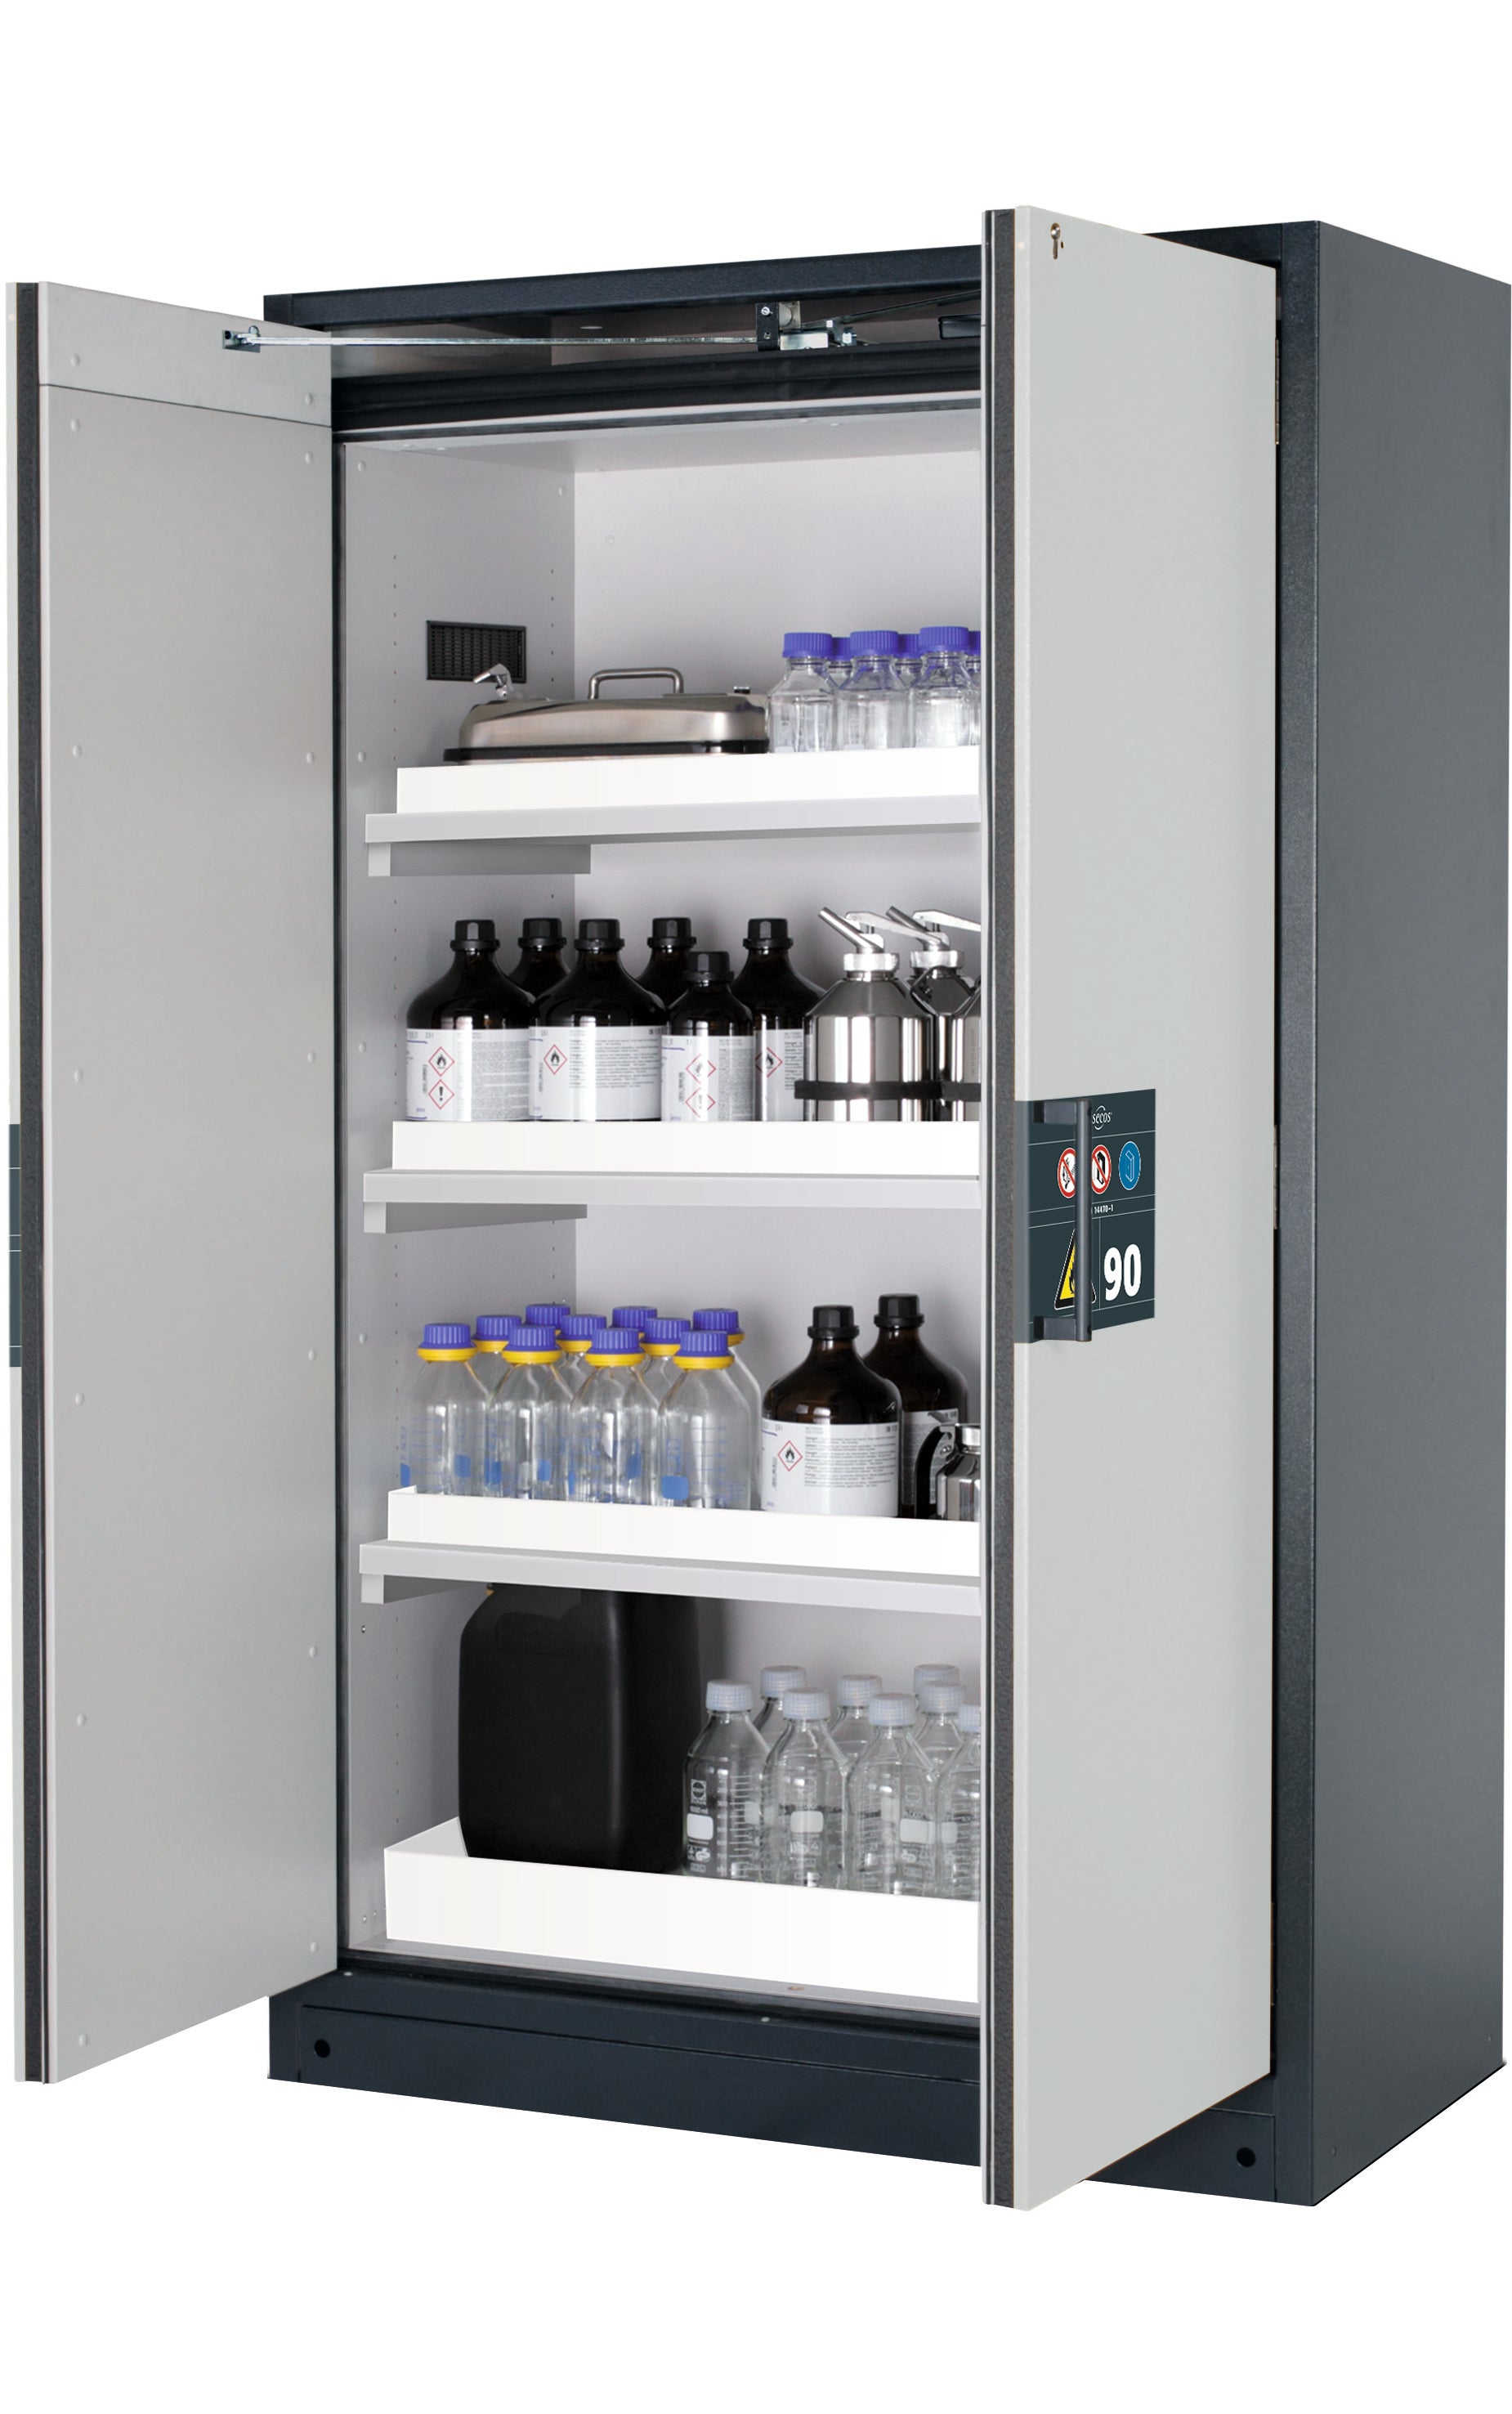 Type 90 safety storage cabinet Q-PEGASUS-90 model Q90.195.120.WDAC in light grey RAL 7035 with 3x tray shelf (standard) (polypropylene),